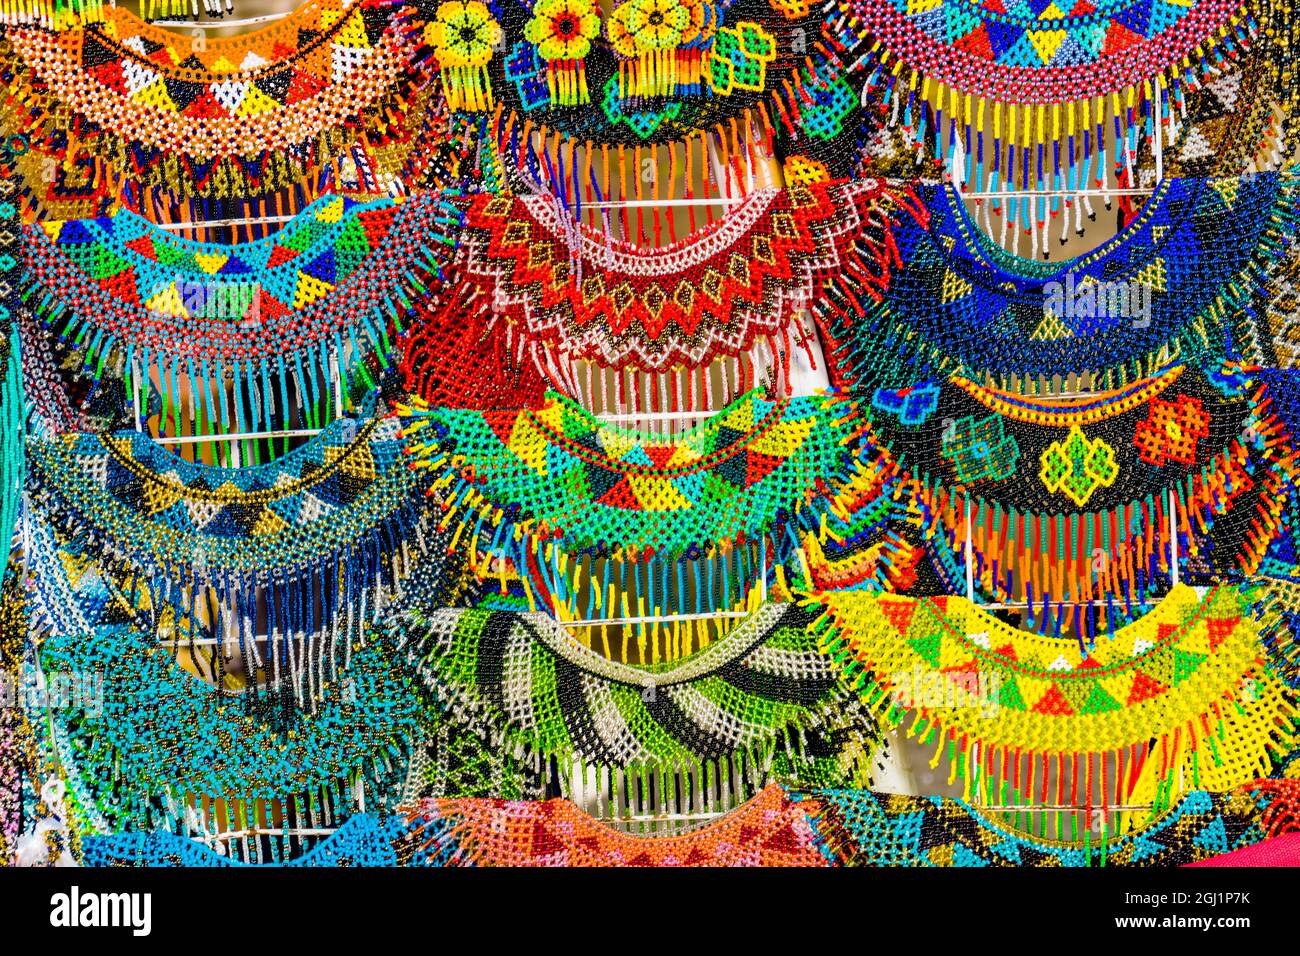 Colorful Mexican bead necklaces, Oaxaca, Juarez, Mexico Stock Photo - Alamy